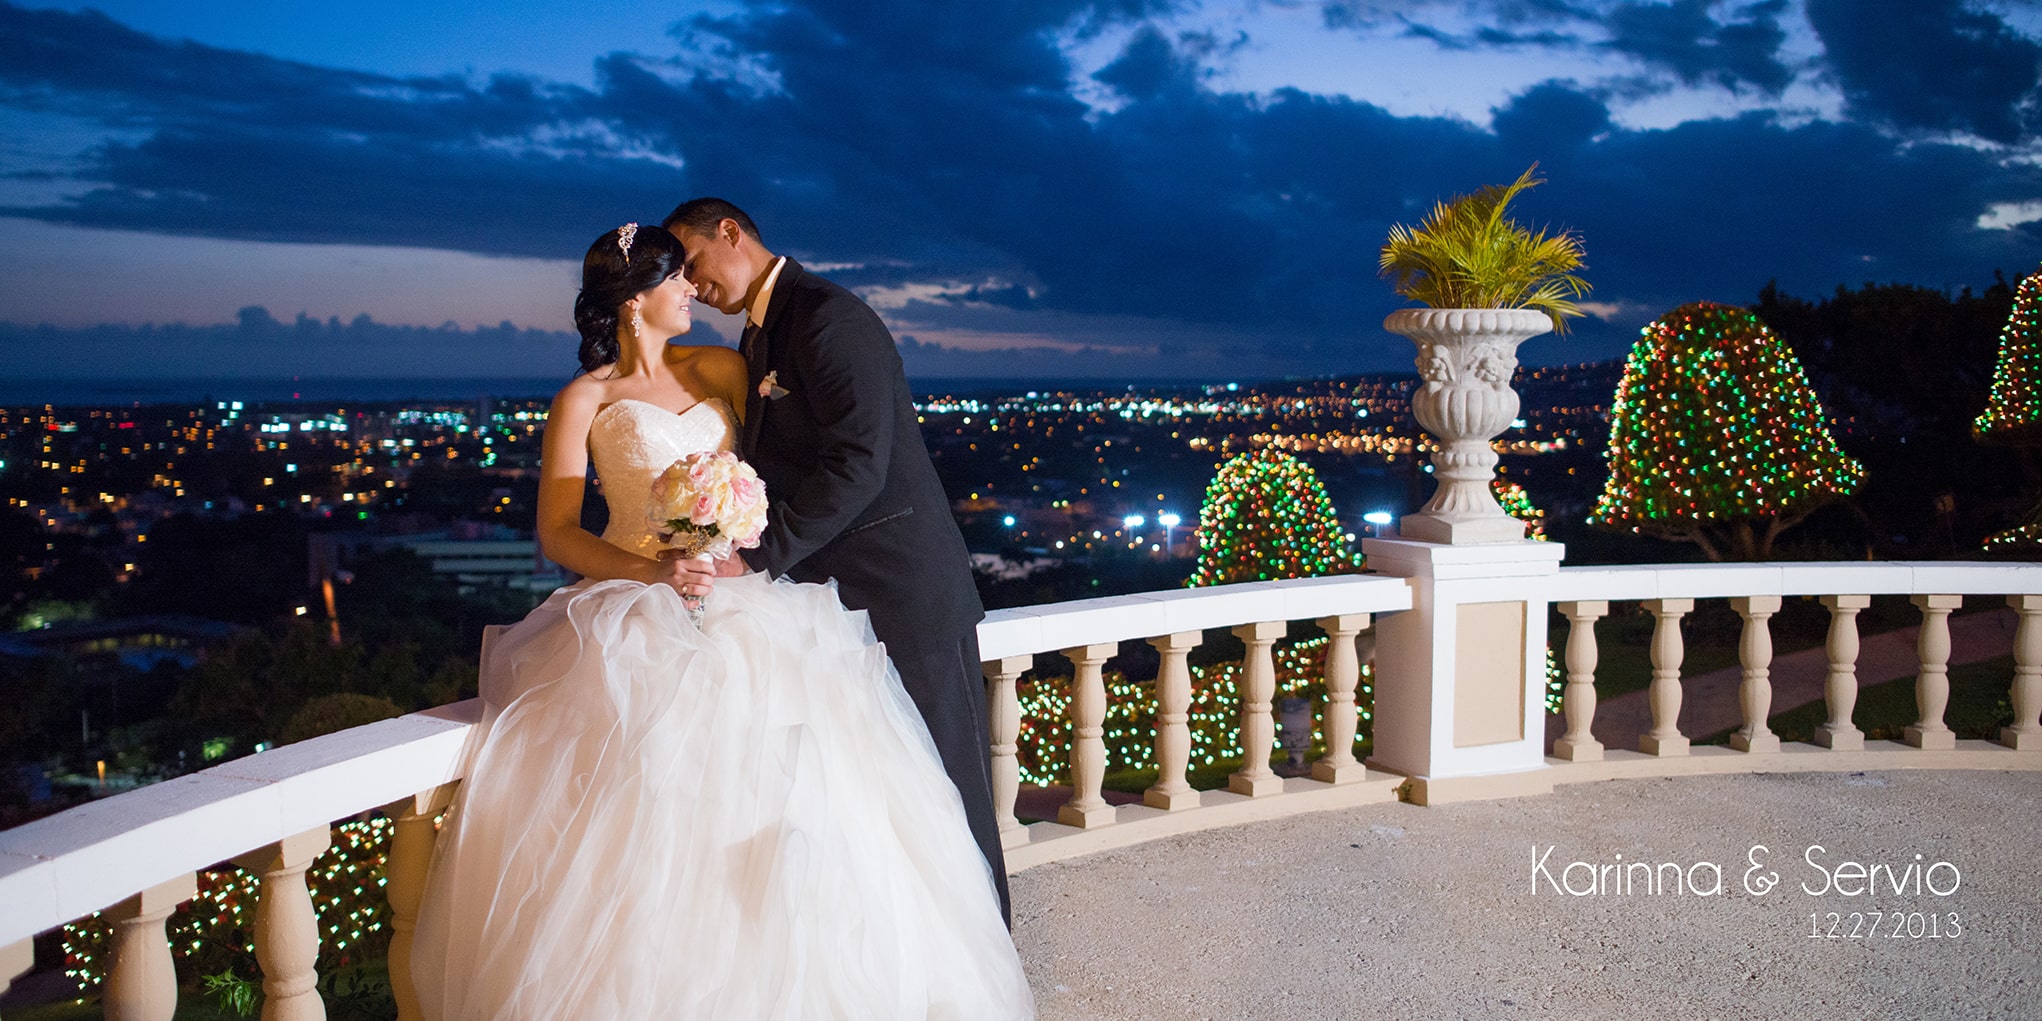 fotografia de bodas en el Castillo Serrallés en Ponce por Camille Fontanez